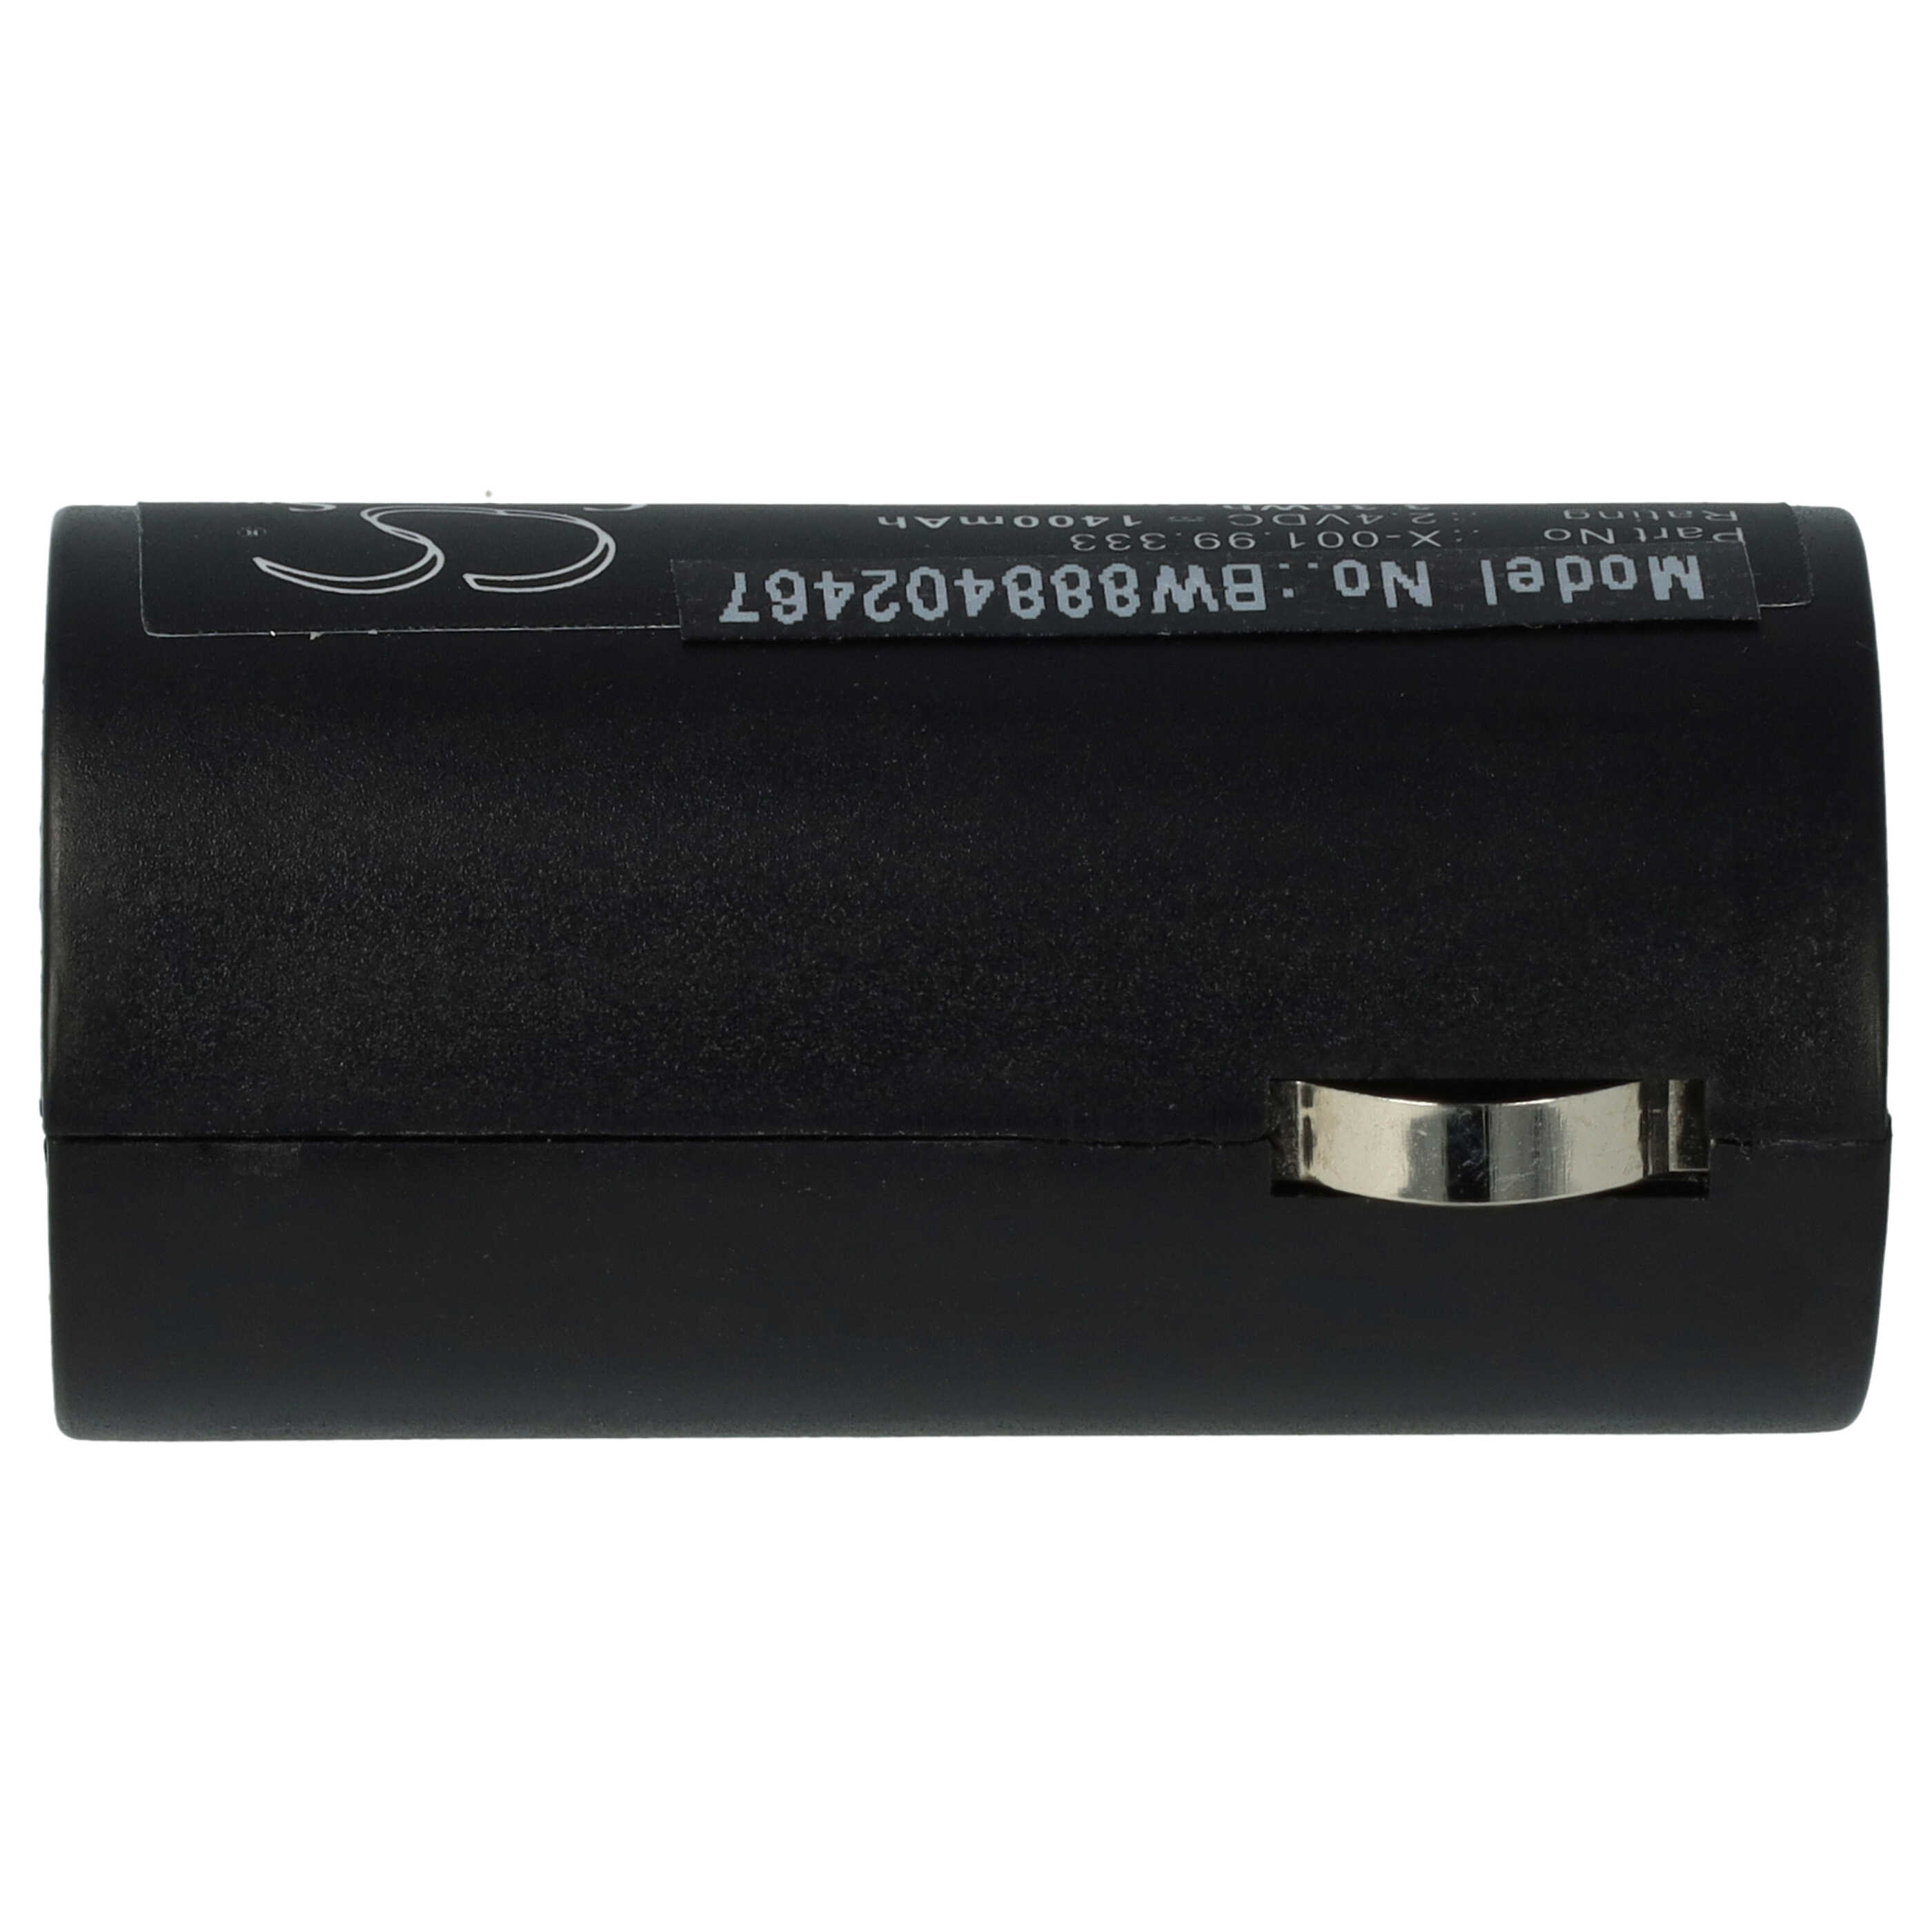 Akumulator zamiennik Heine X-001.99.333 - 1400 mAh 2,4 V NiMH